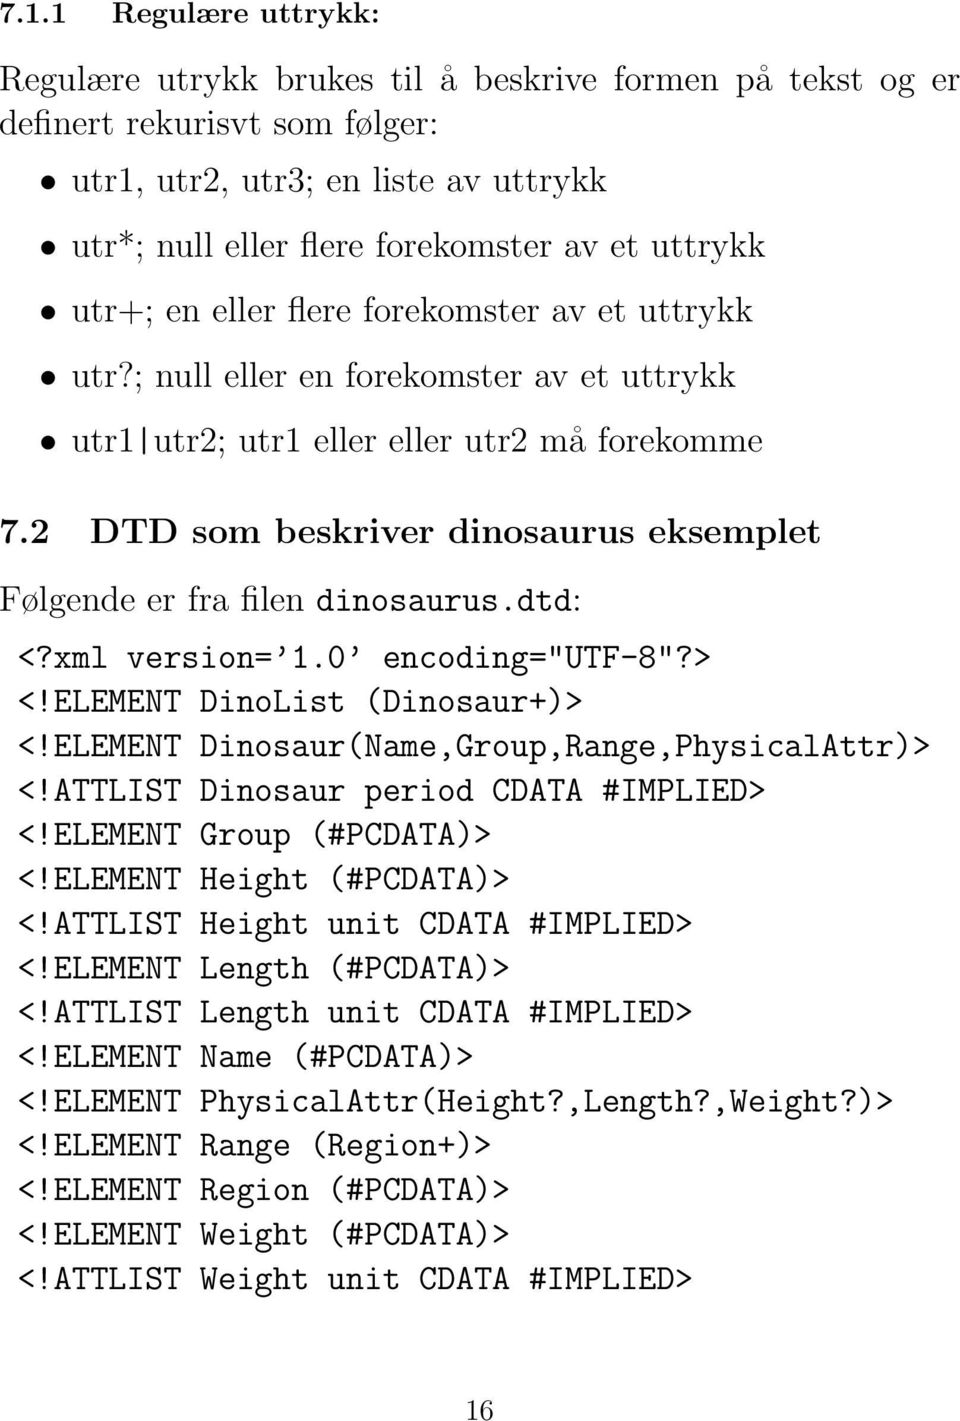 2 DTD som beskriver dinosaurus eksemplet Følgende er fra filen dinosaurus.dtd: <?xml version= 1.0 encoding="utf-8"?> <!ELEMENT DinoList (Dinosaur+)> <!